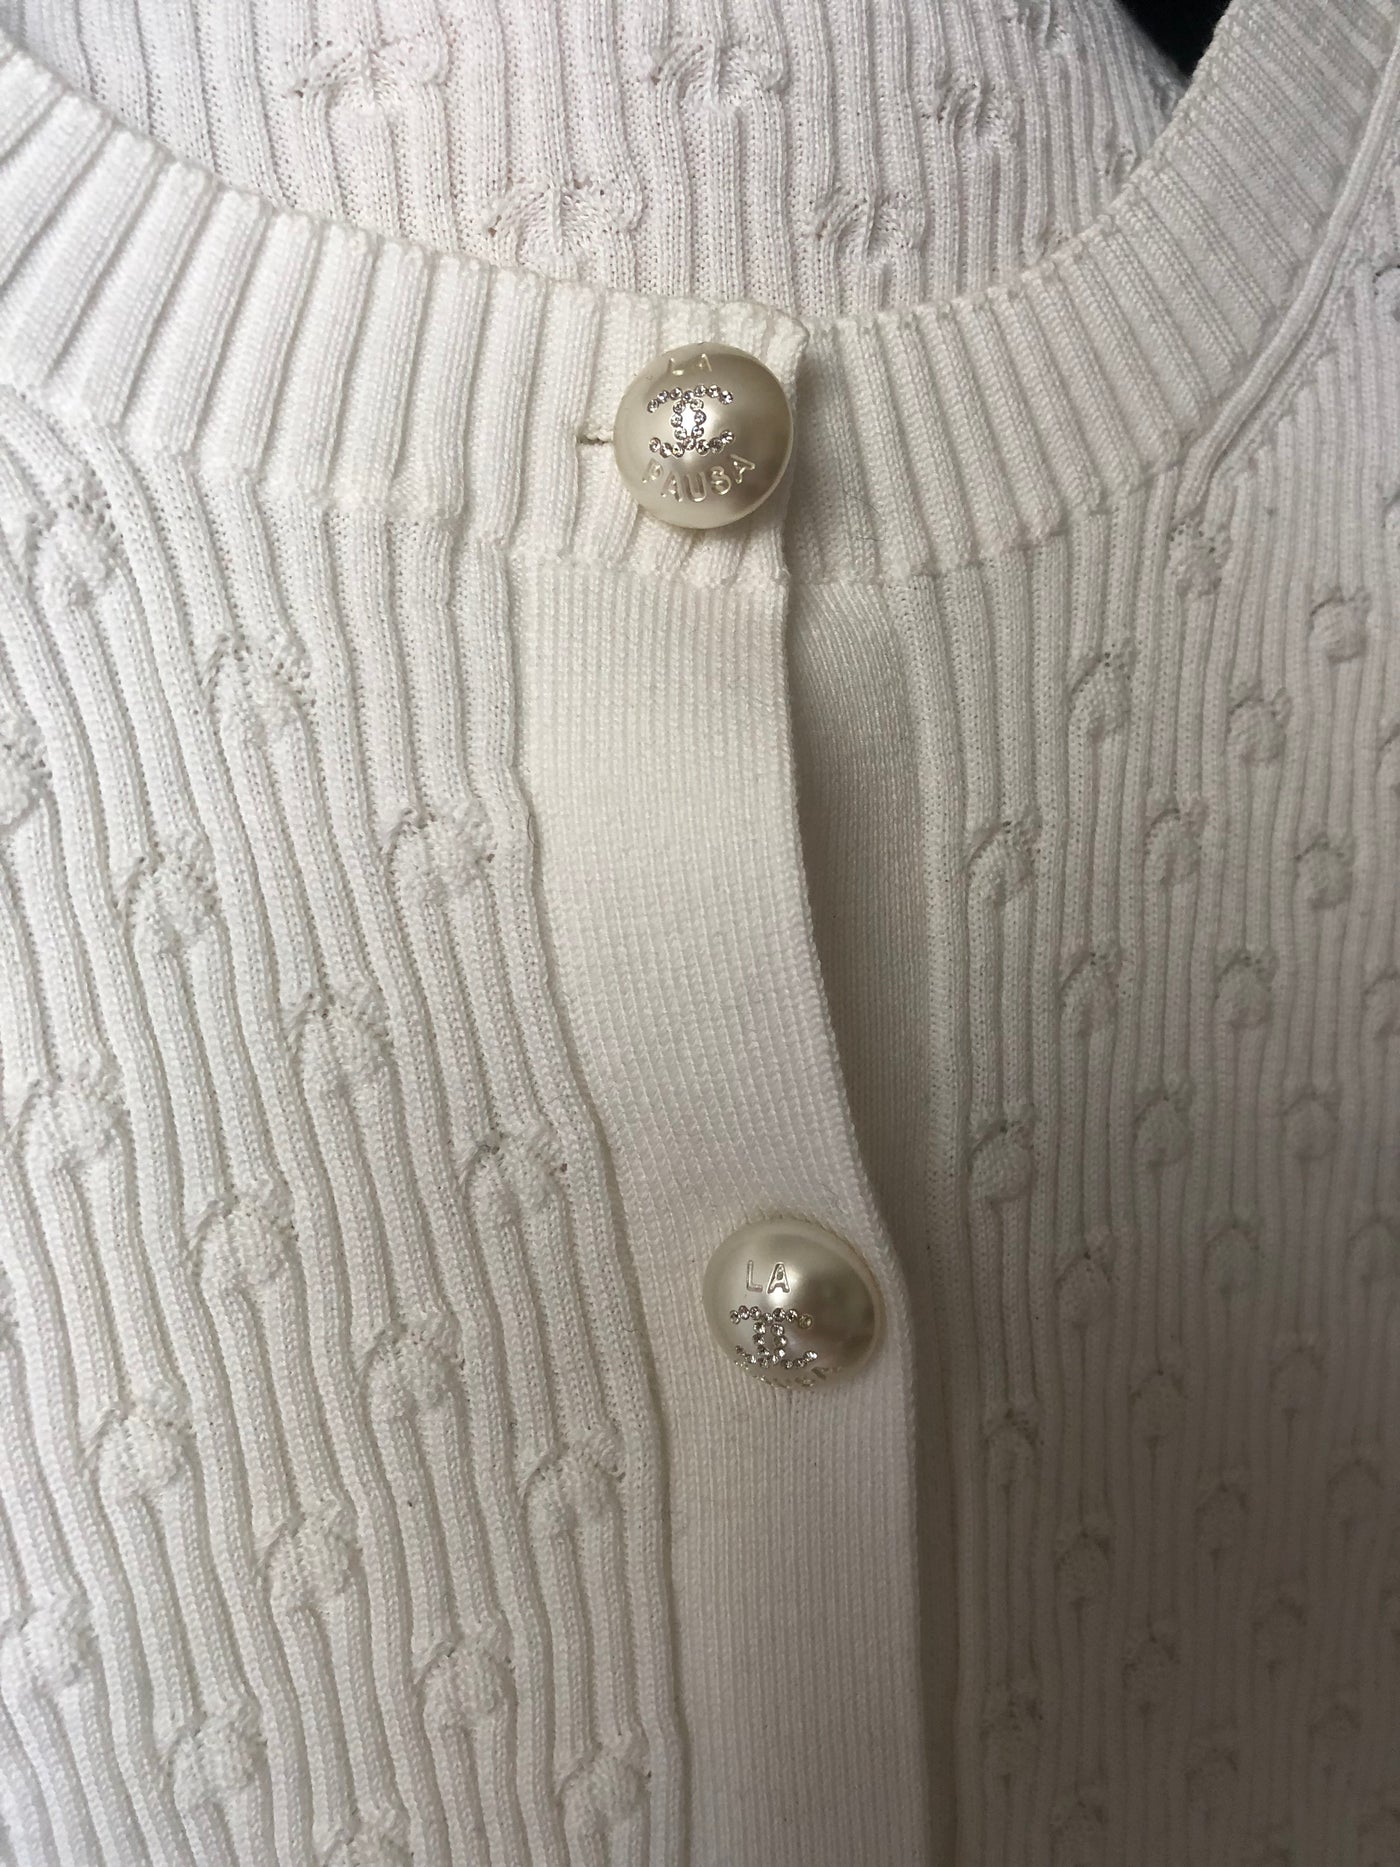 CHANEL La Pausa 2019 collection white cardigan size 34